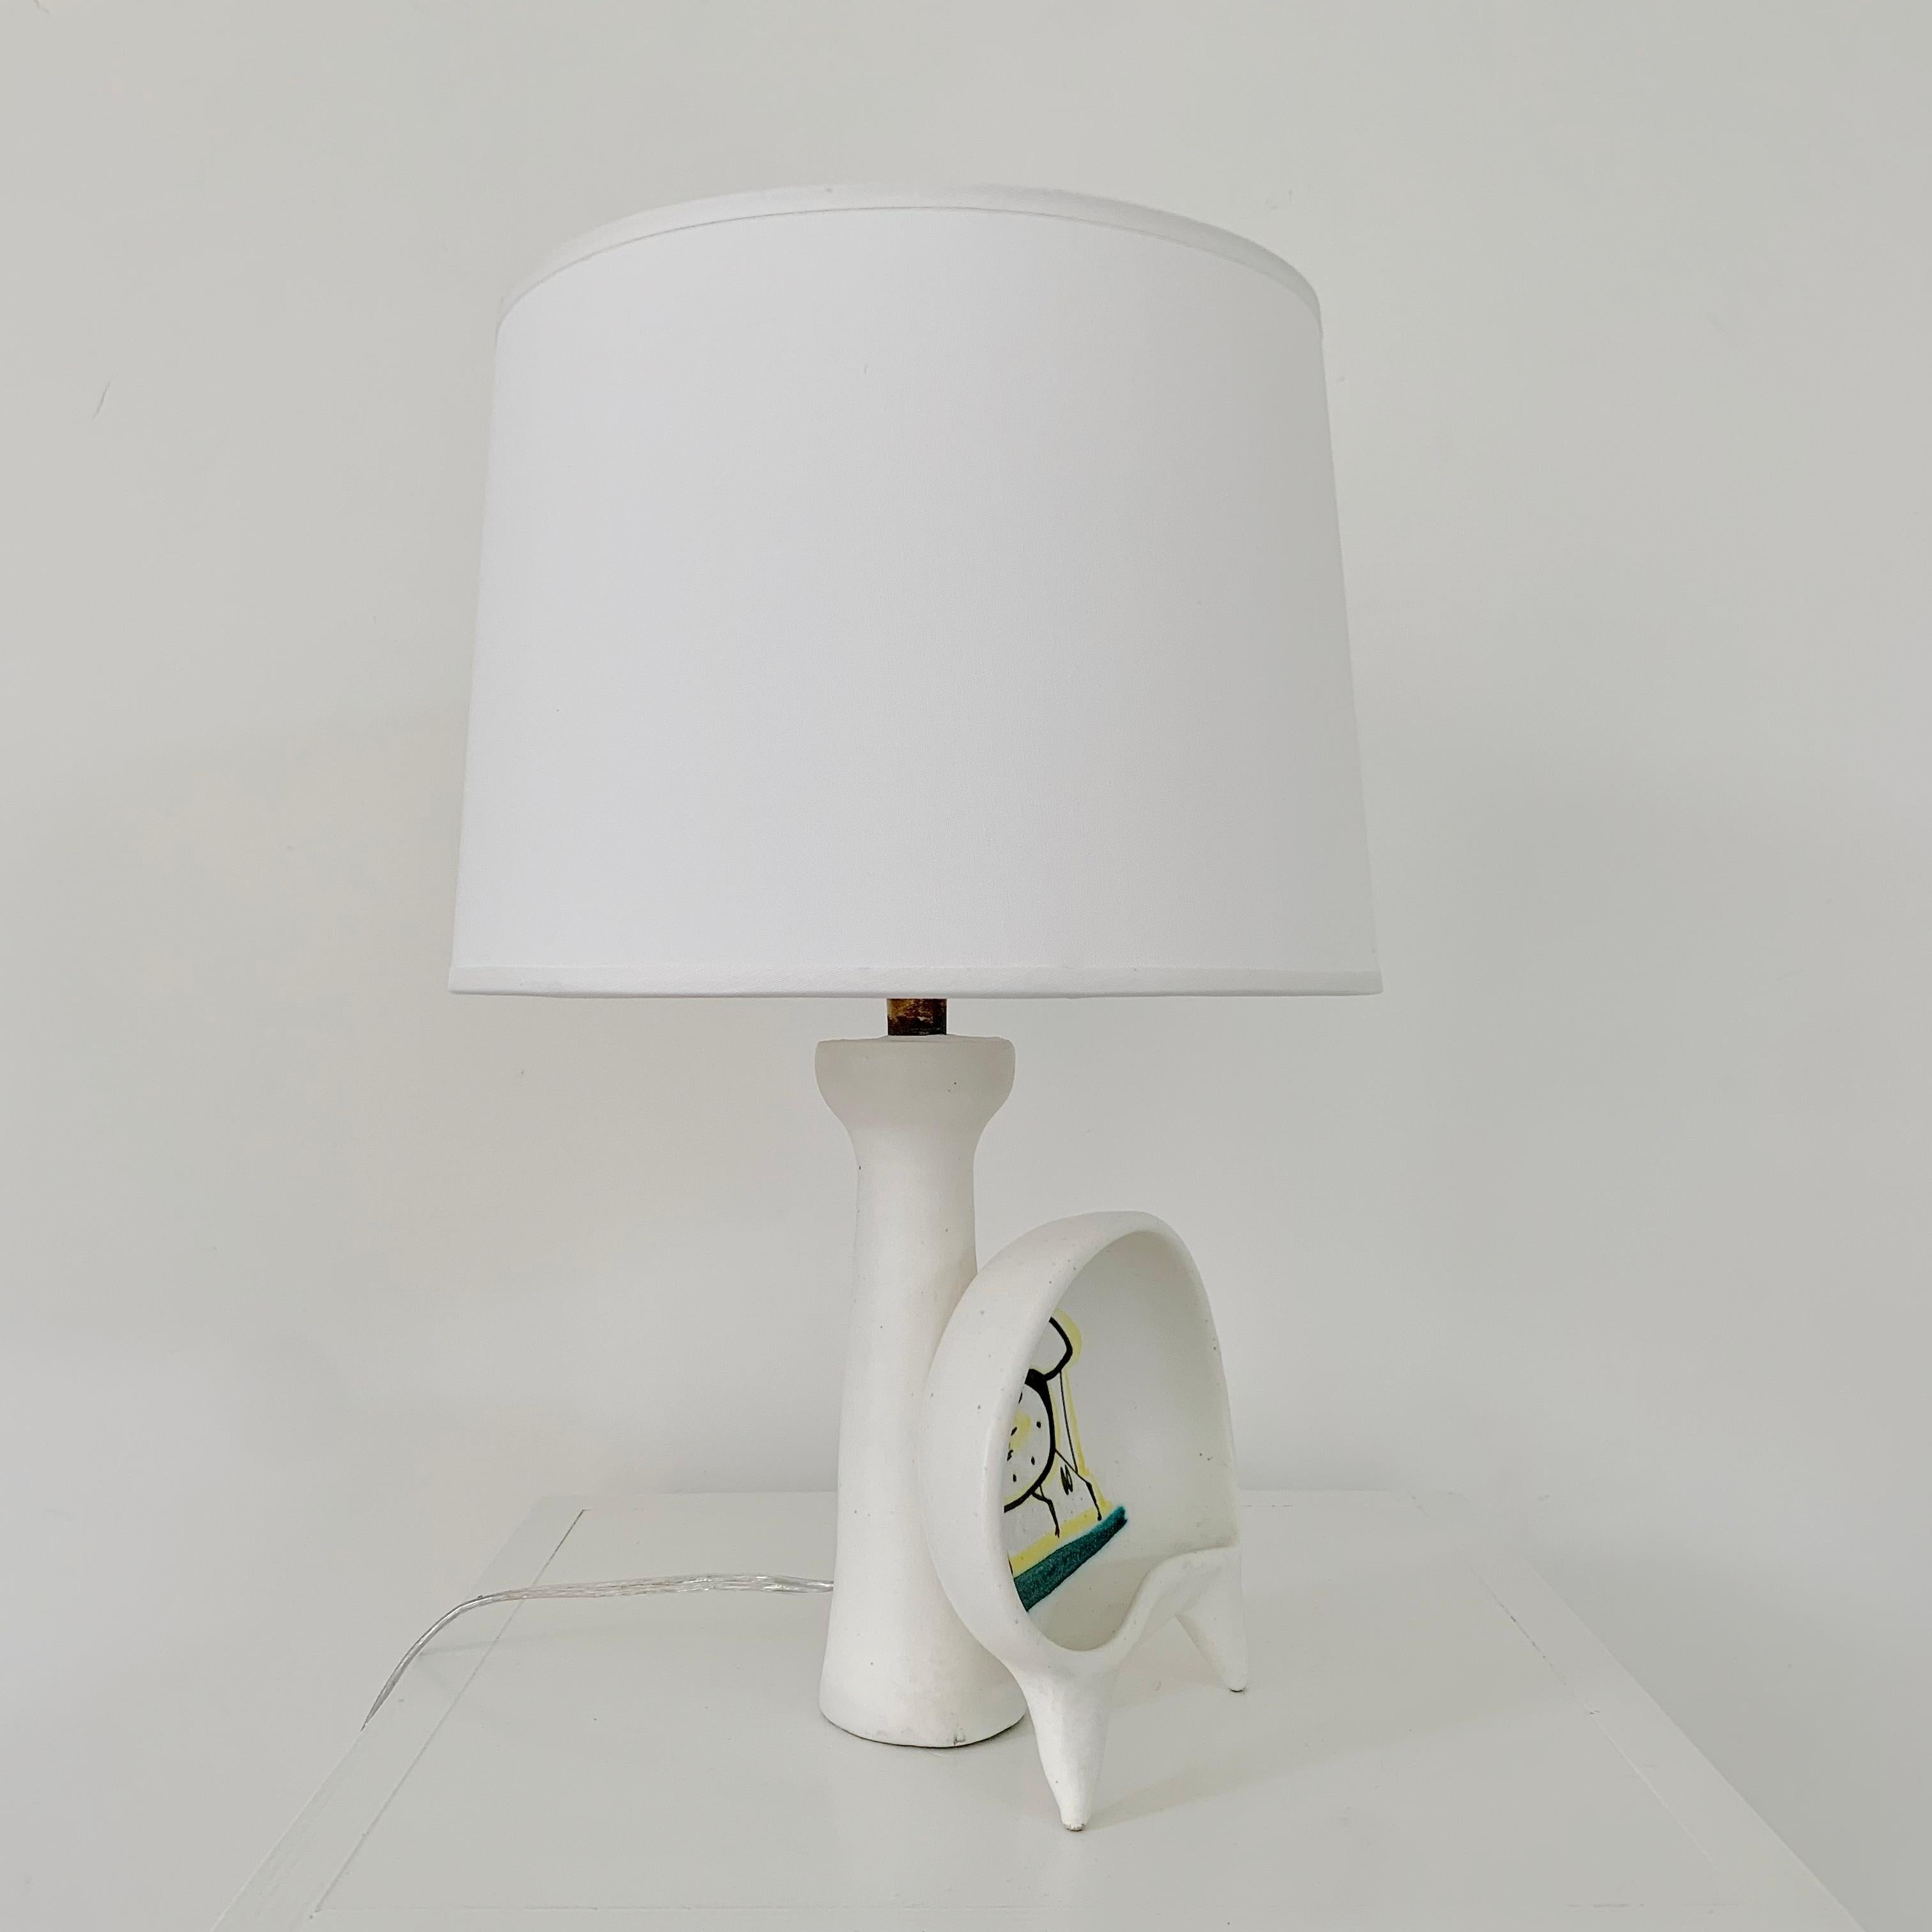 Roger Capron Ceramic Table Lamp, circa 1955, France. 1